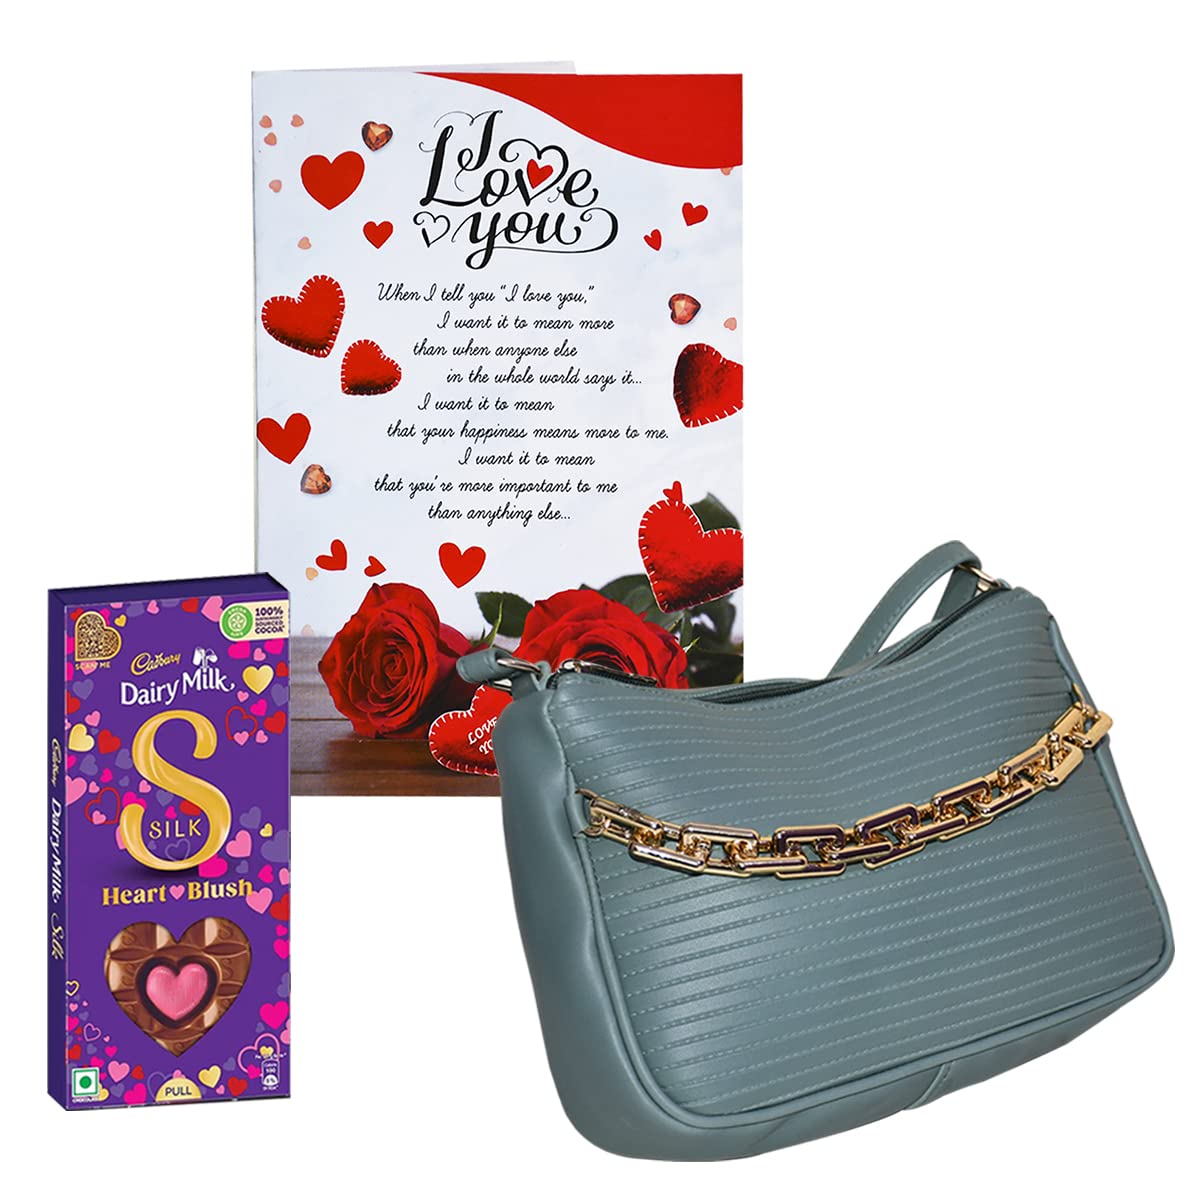 Best Gift for Wife, Girlfriend - Love Greeting Card, Handbag, Silk  Chocolate - Anniversary - Birthday - Valentine Day Gift